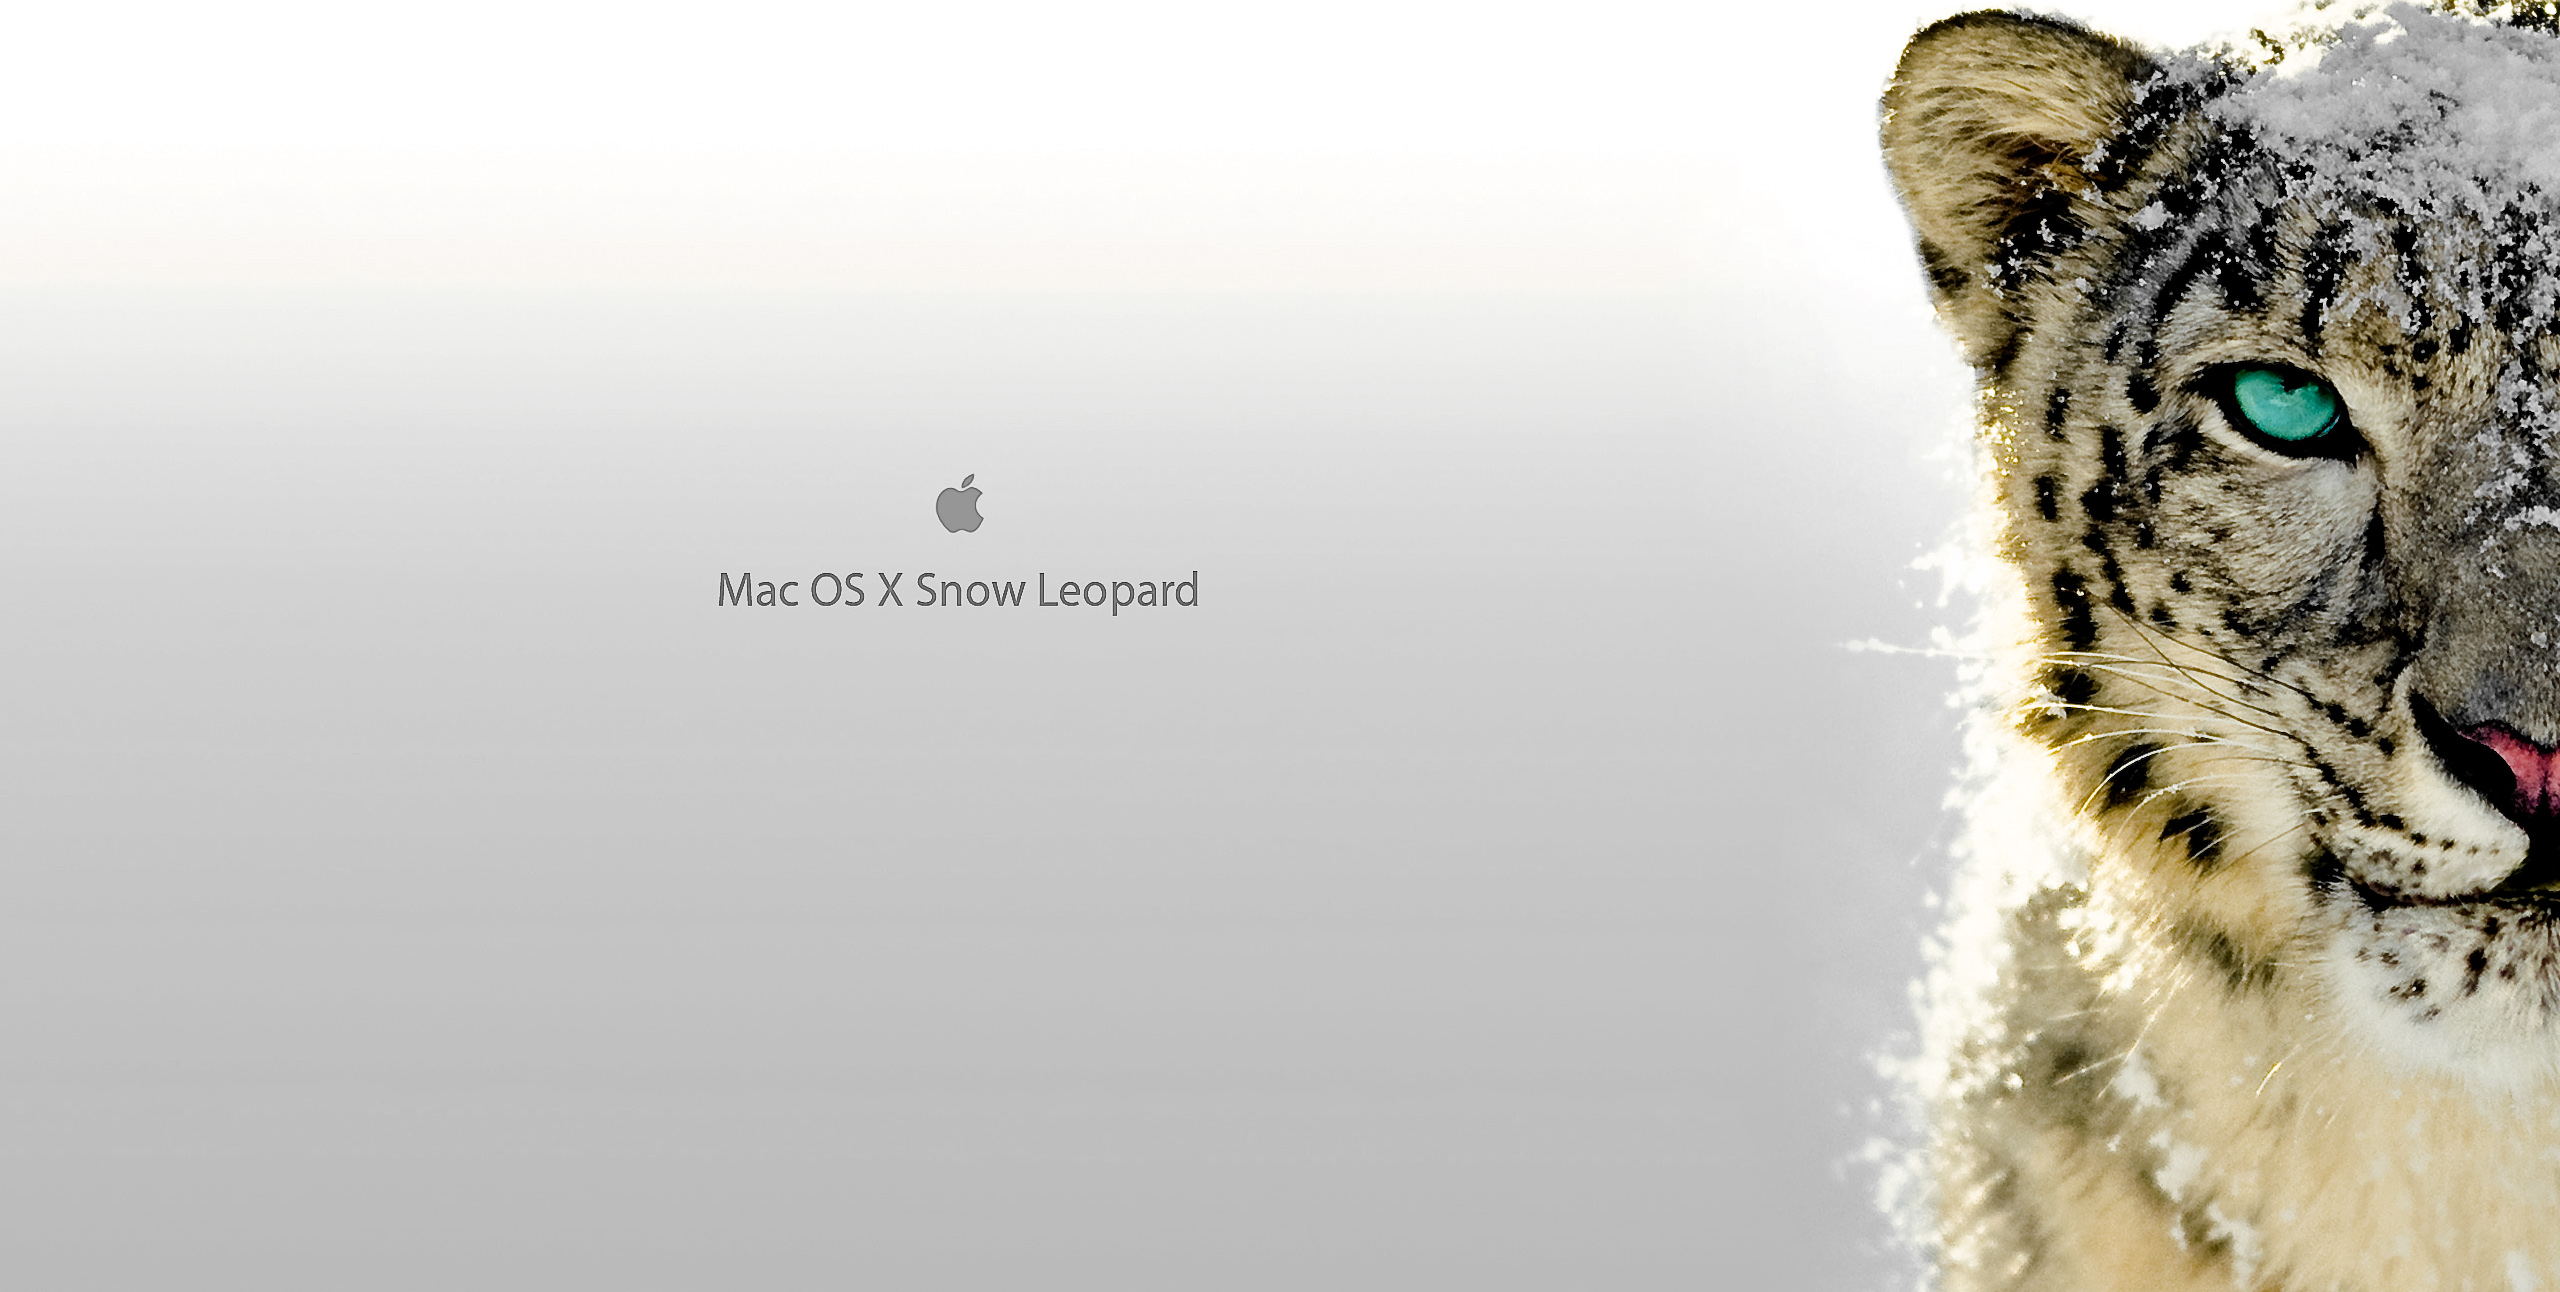 Mac Os X Snow Leopard Wallpaper Pack